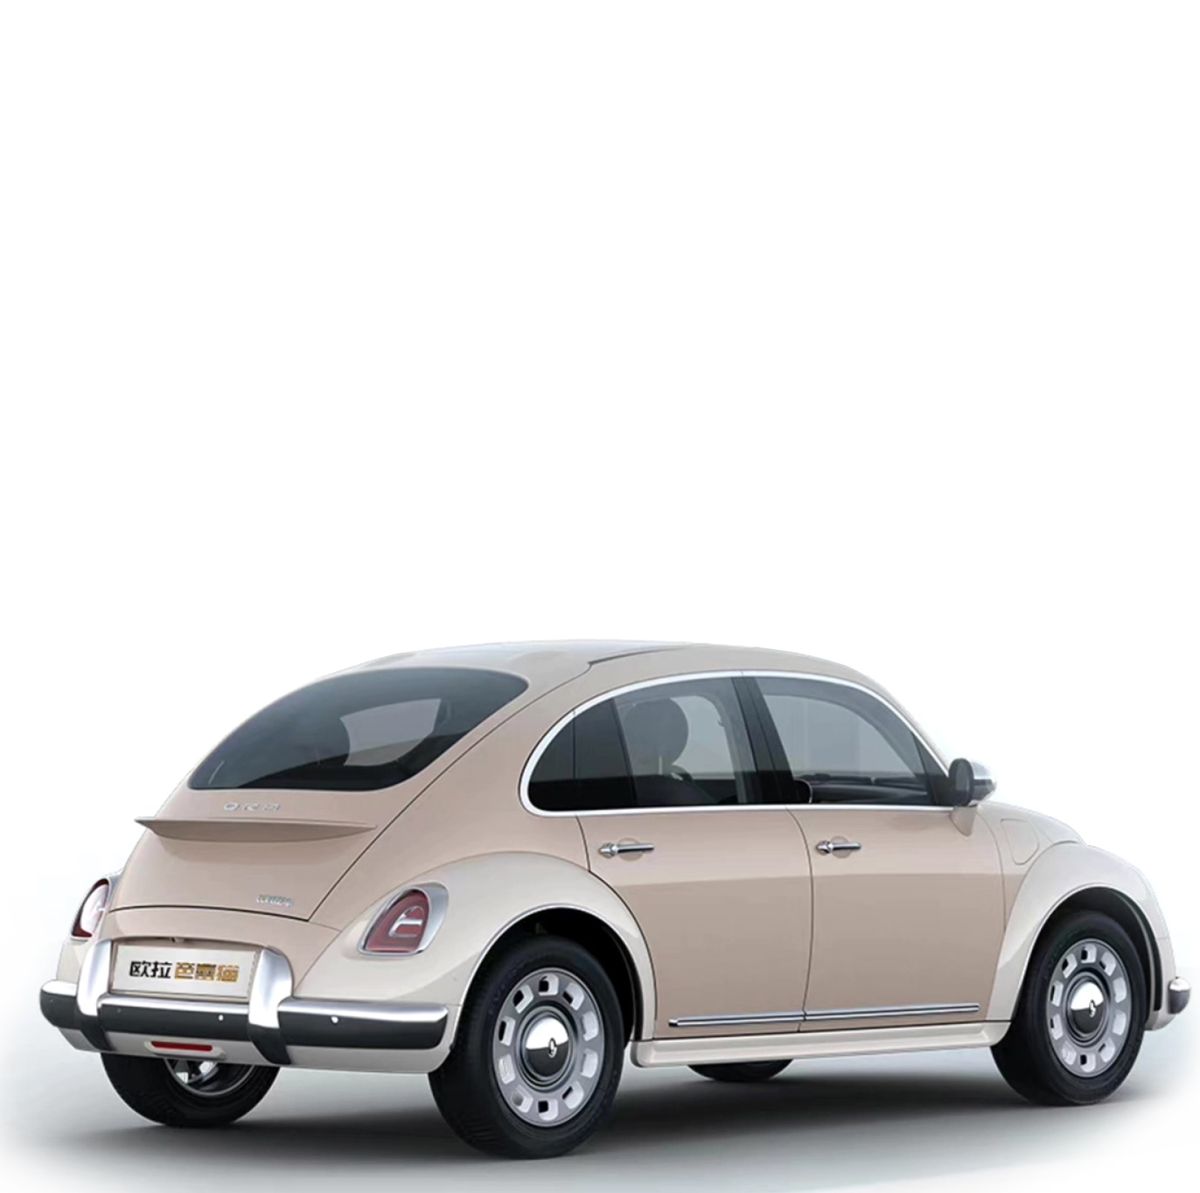 Should the VW Beetle Return as an EV?